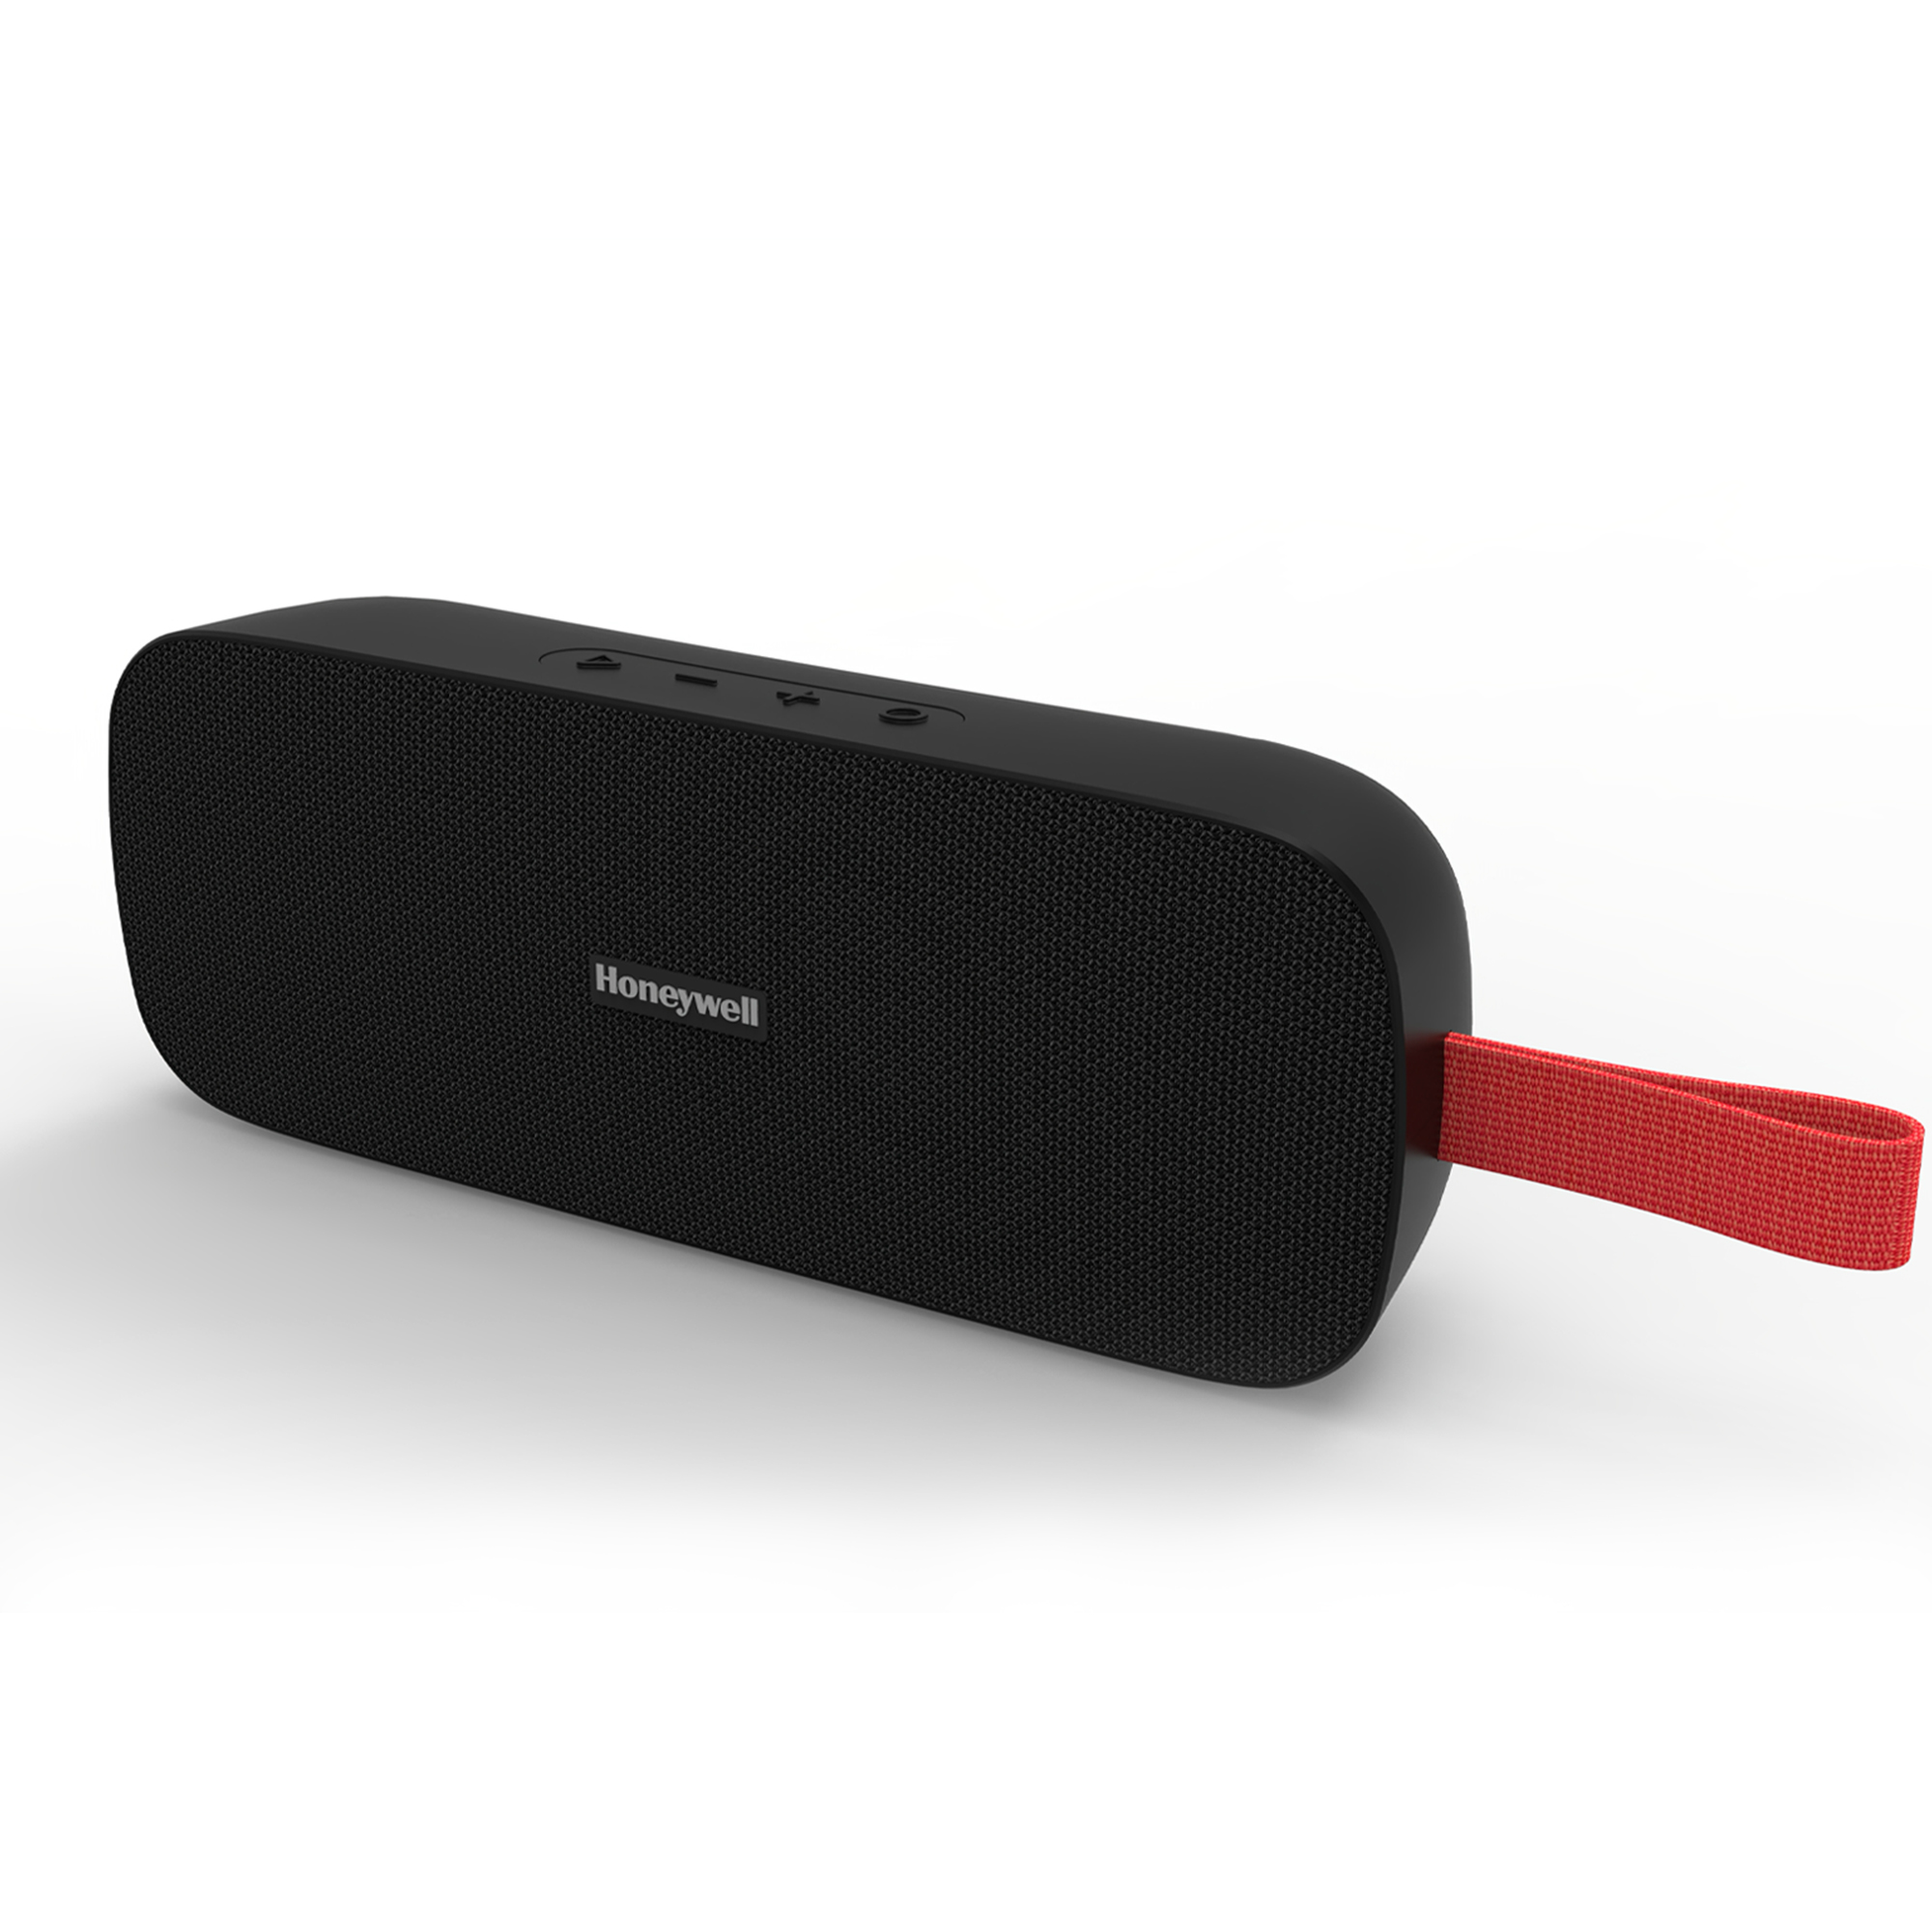 Honeywell Newly Launched Trueno U300, Wireless Bluetooth Speaker, 20W - Black